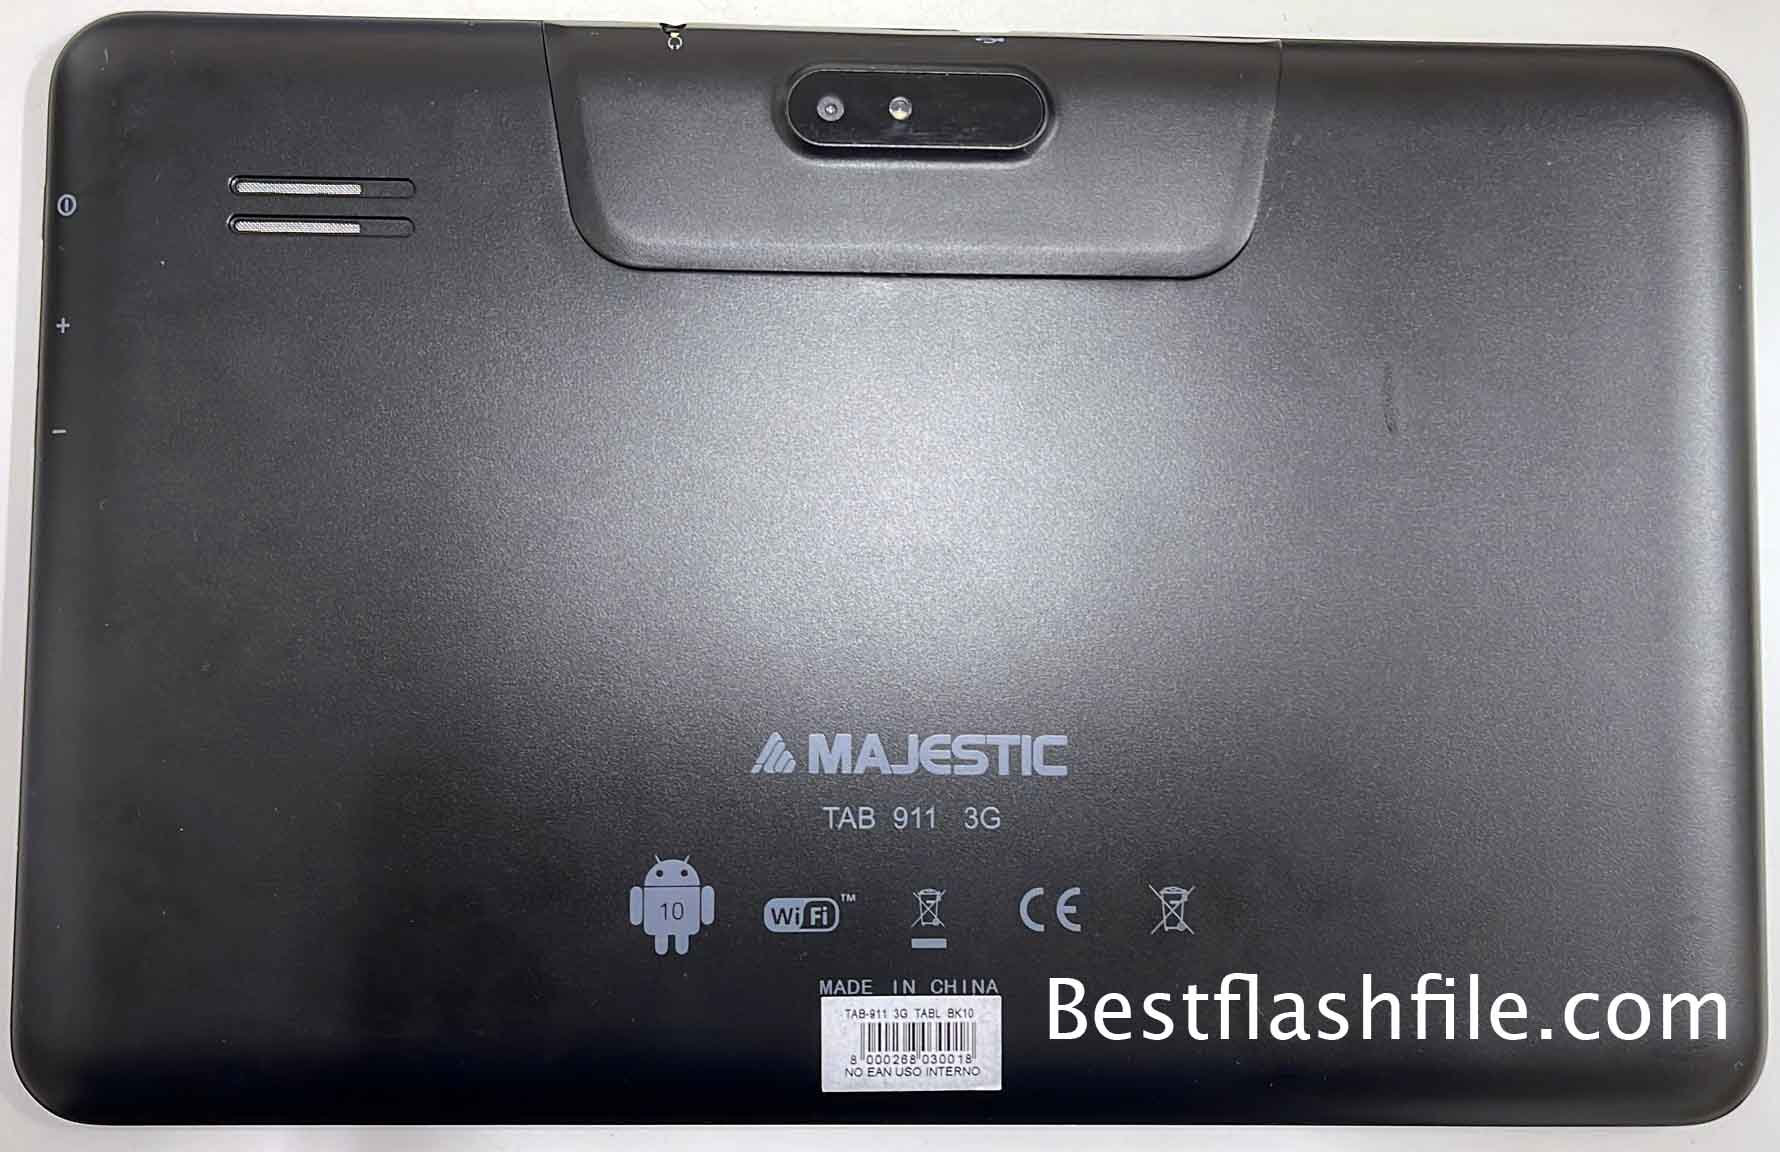 Majestic Tab 911 3G Flash File (Firmware)